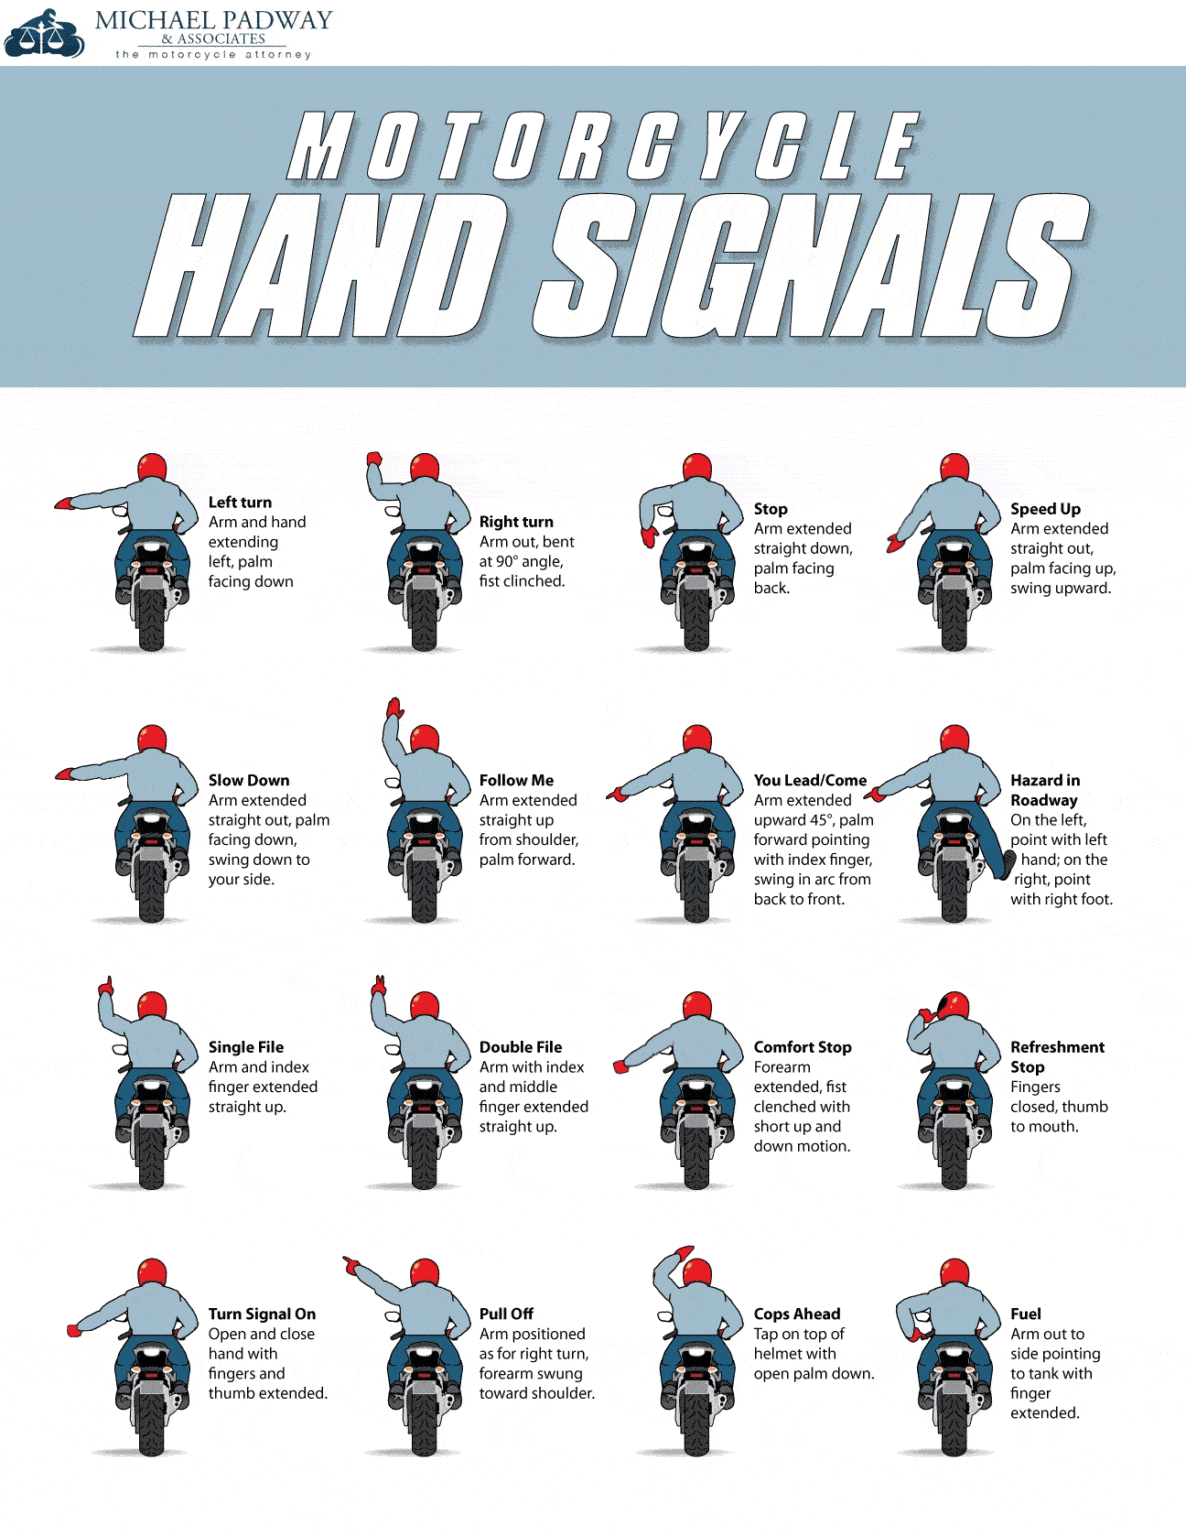 hand signals driving